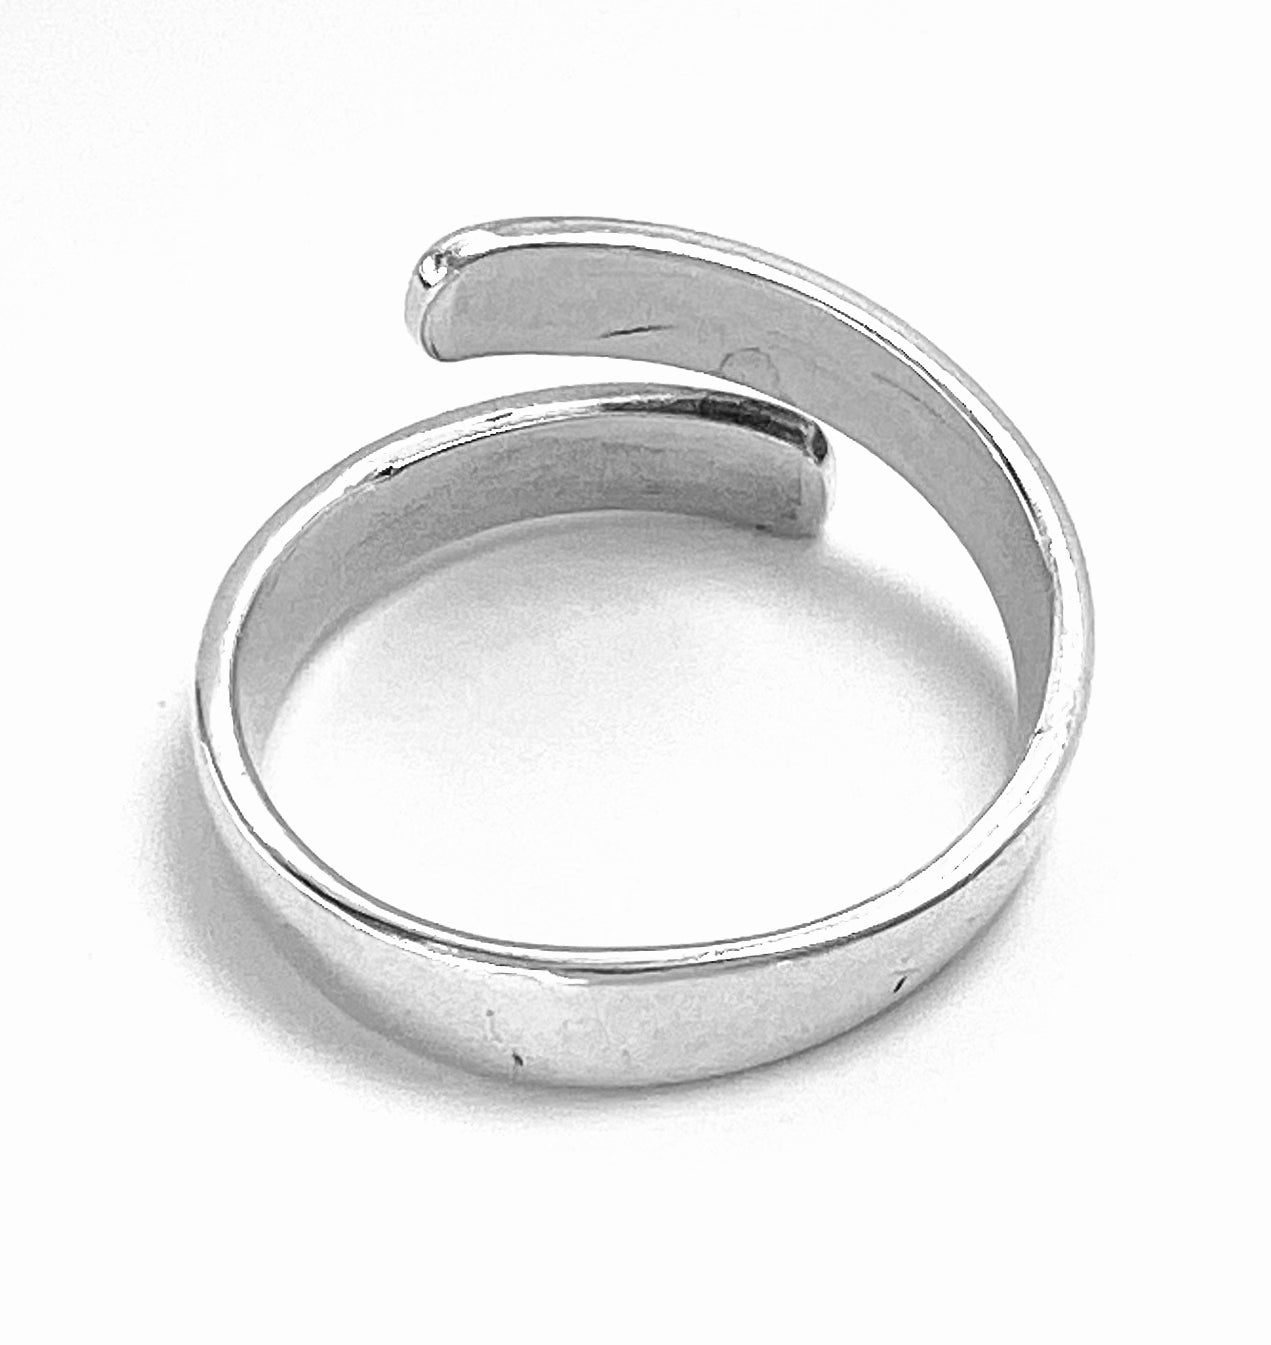 Ring Carpe Diem, 925 silver